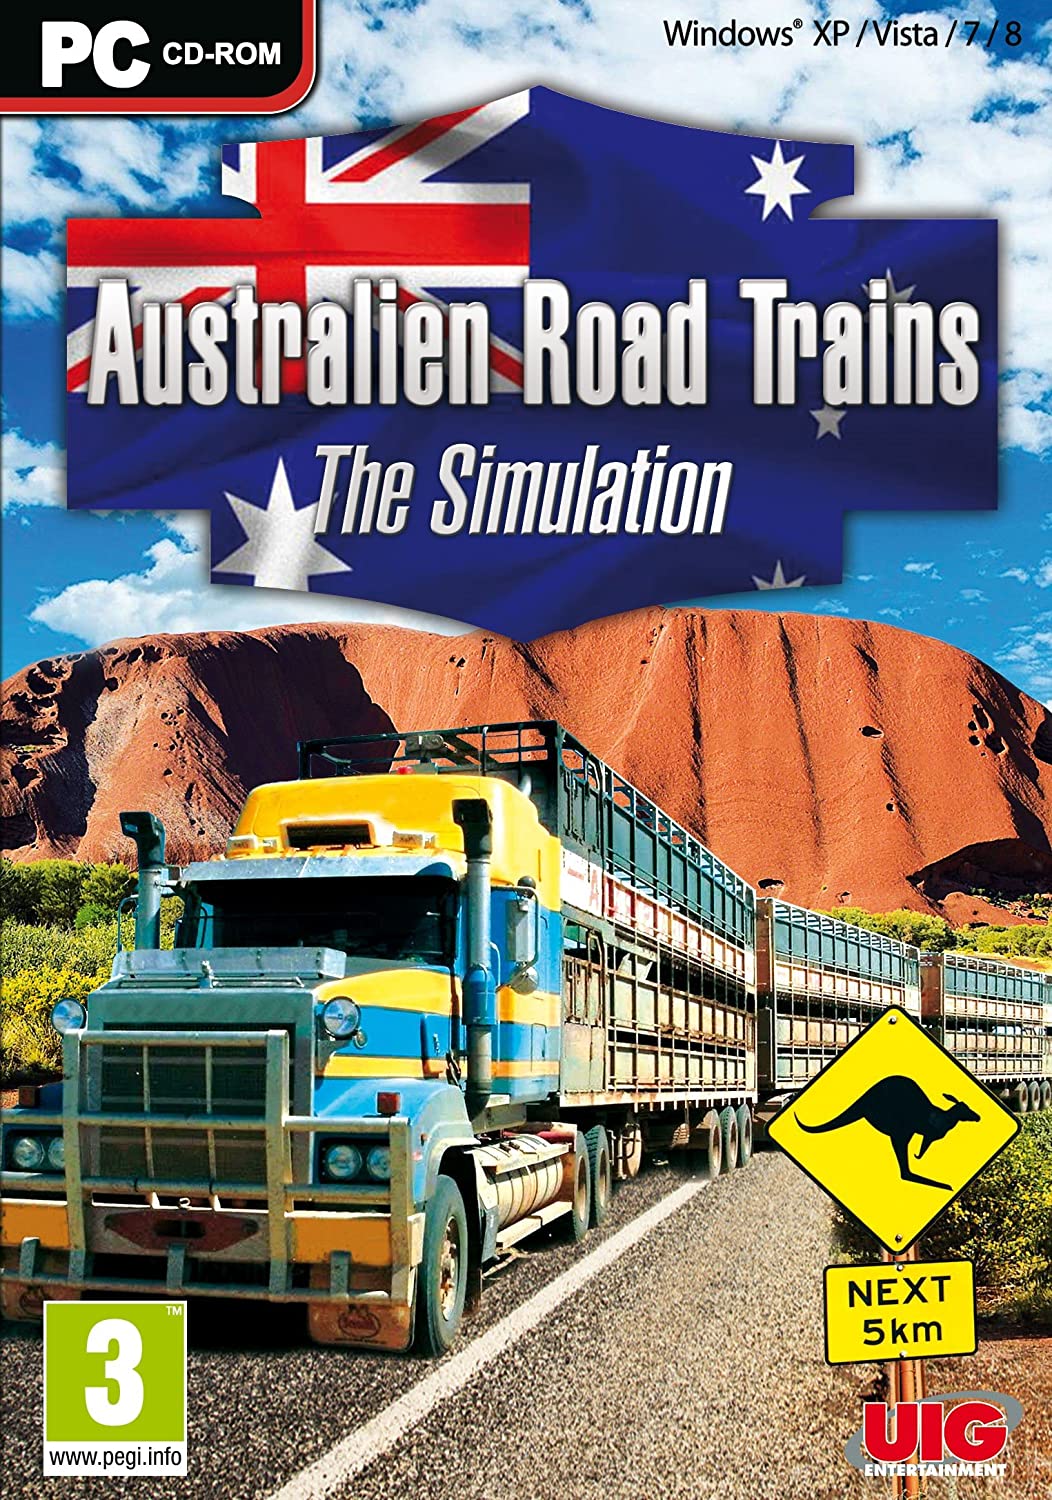 PC-CD-ROM „Australian Road Trains“.